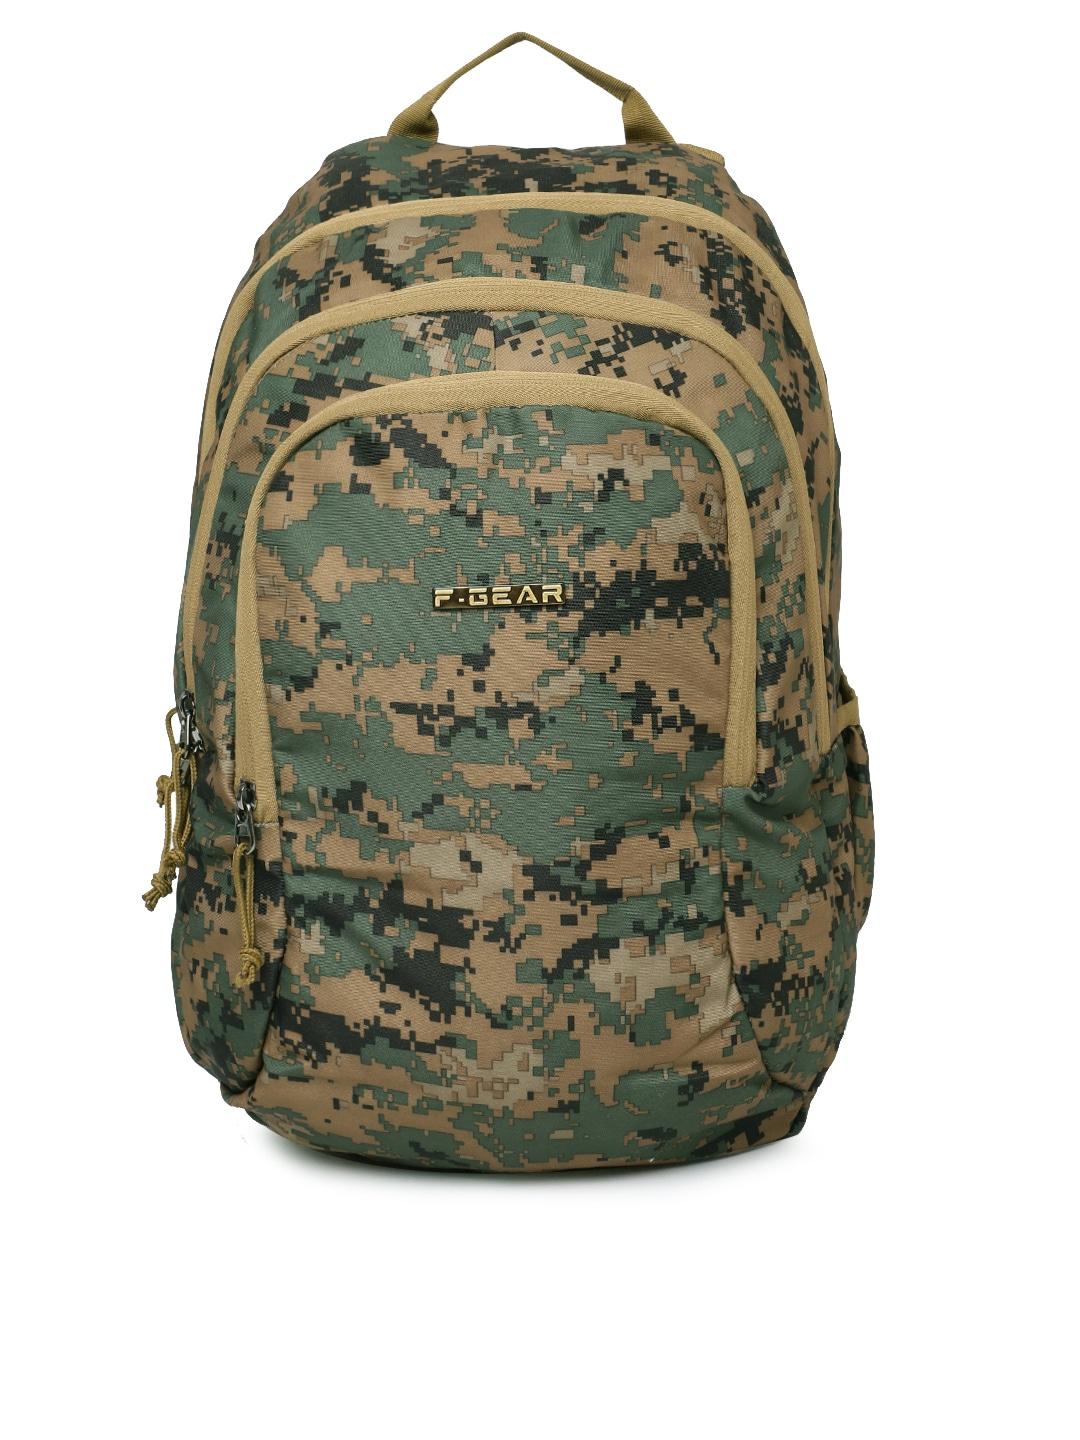 f gear unisex brown & green military crusader marpat graphic printed backpack